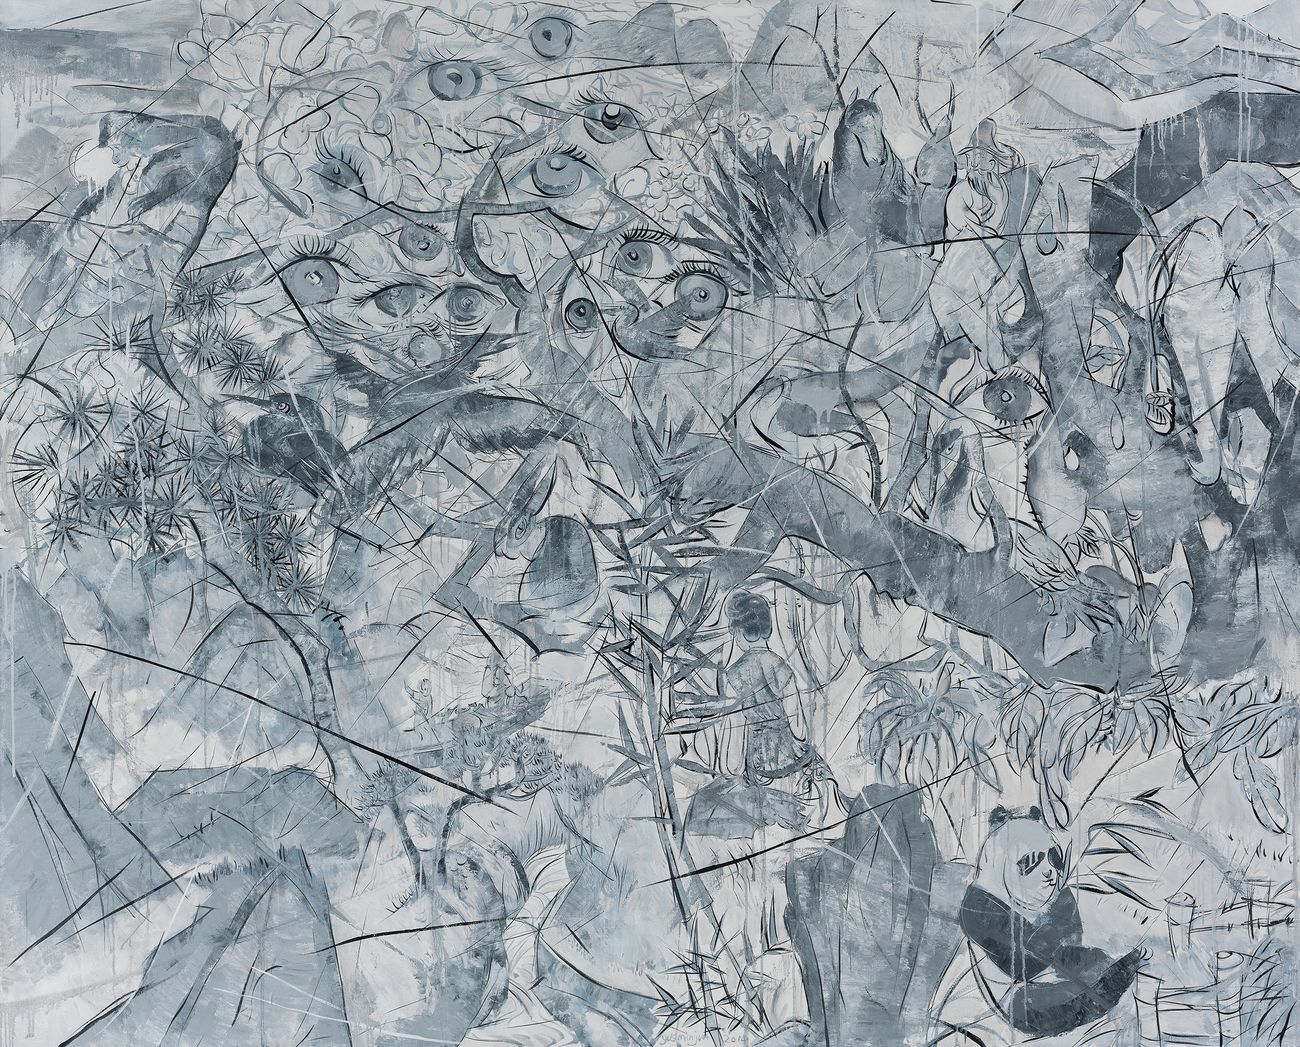 Yue Minjun, The Broken Dream Garden 10, 2015, olio su tela, 200x250 cm